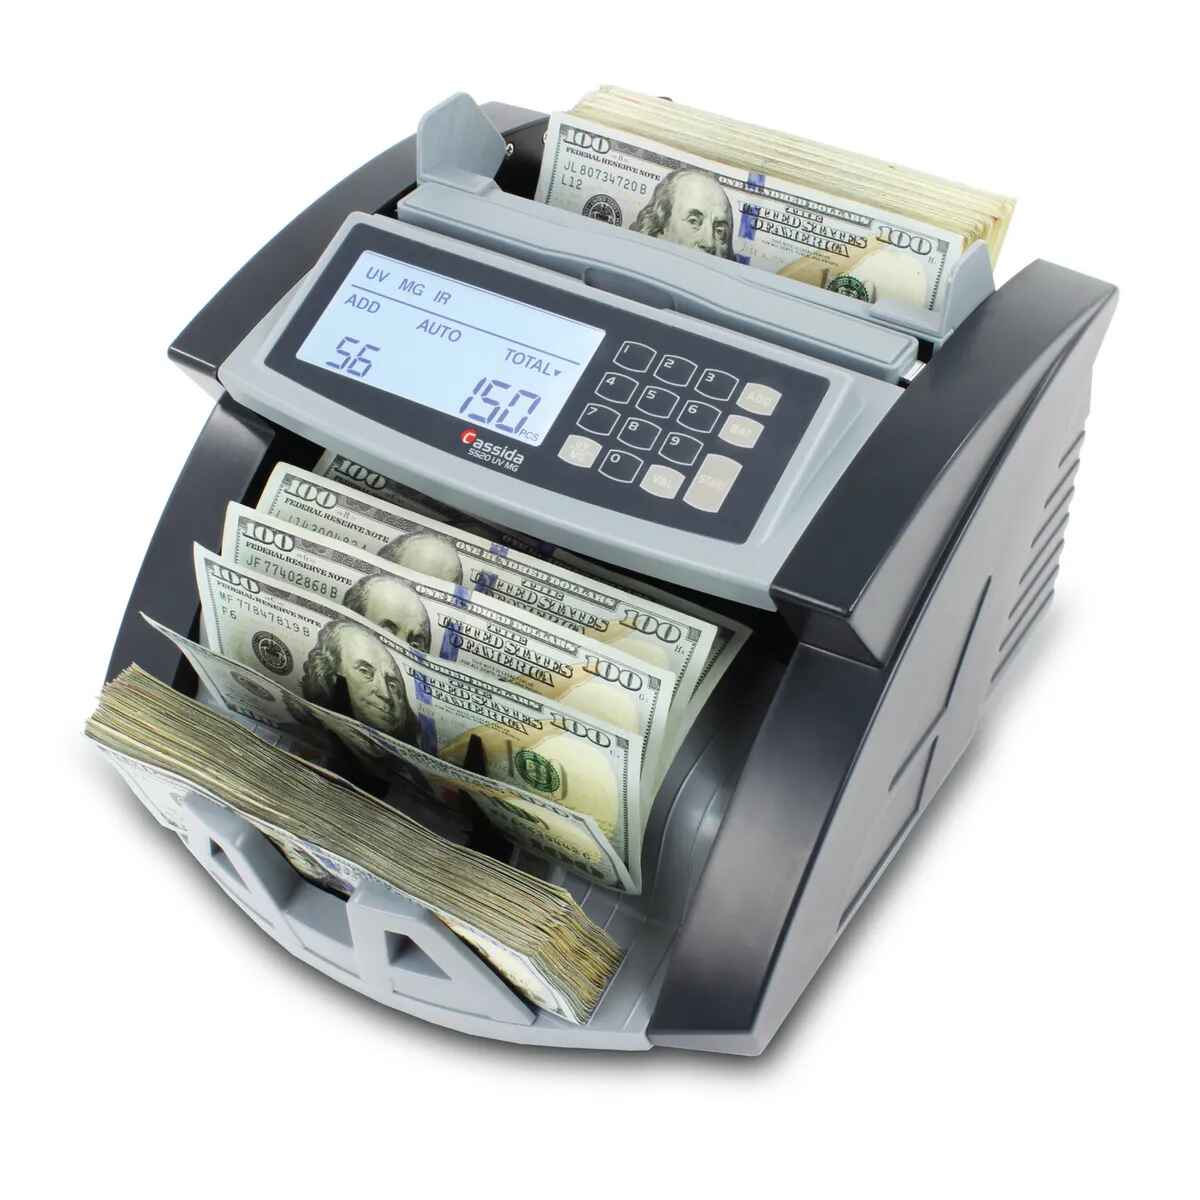 Cassida 5520UVMG Money Counting Machine (UVMG Detection, External Display)